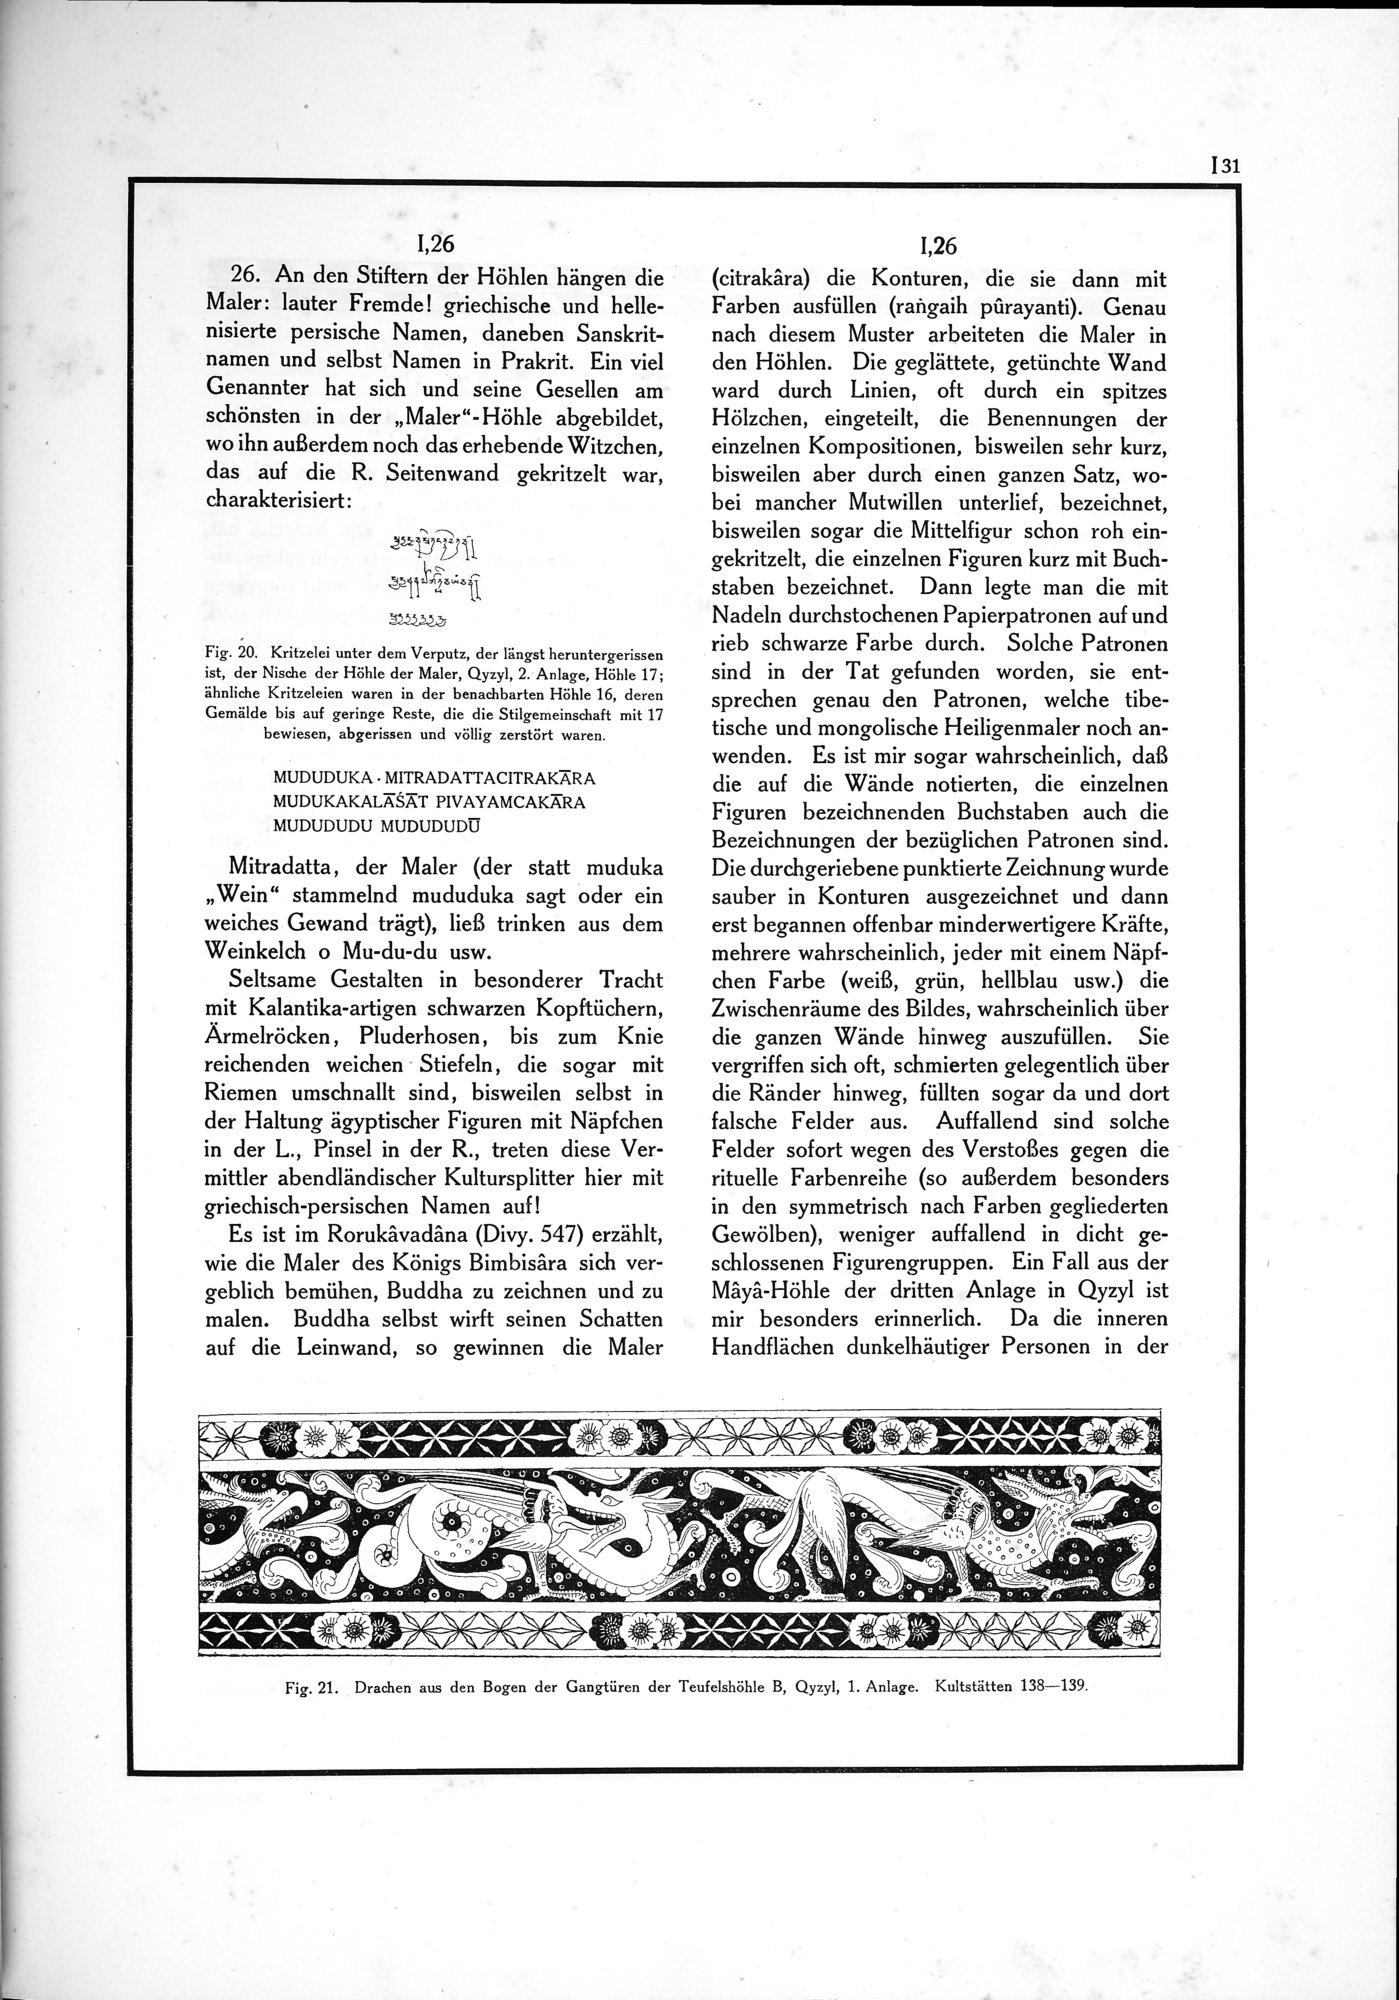 Alt-Kutscha : vol.1 / Page 43 (Grayscale High Resolution Image)